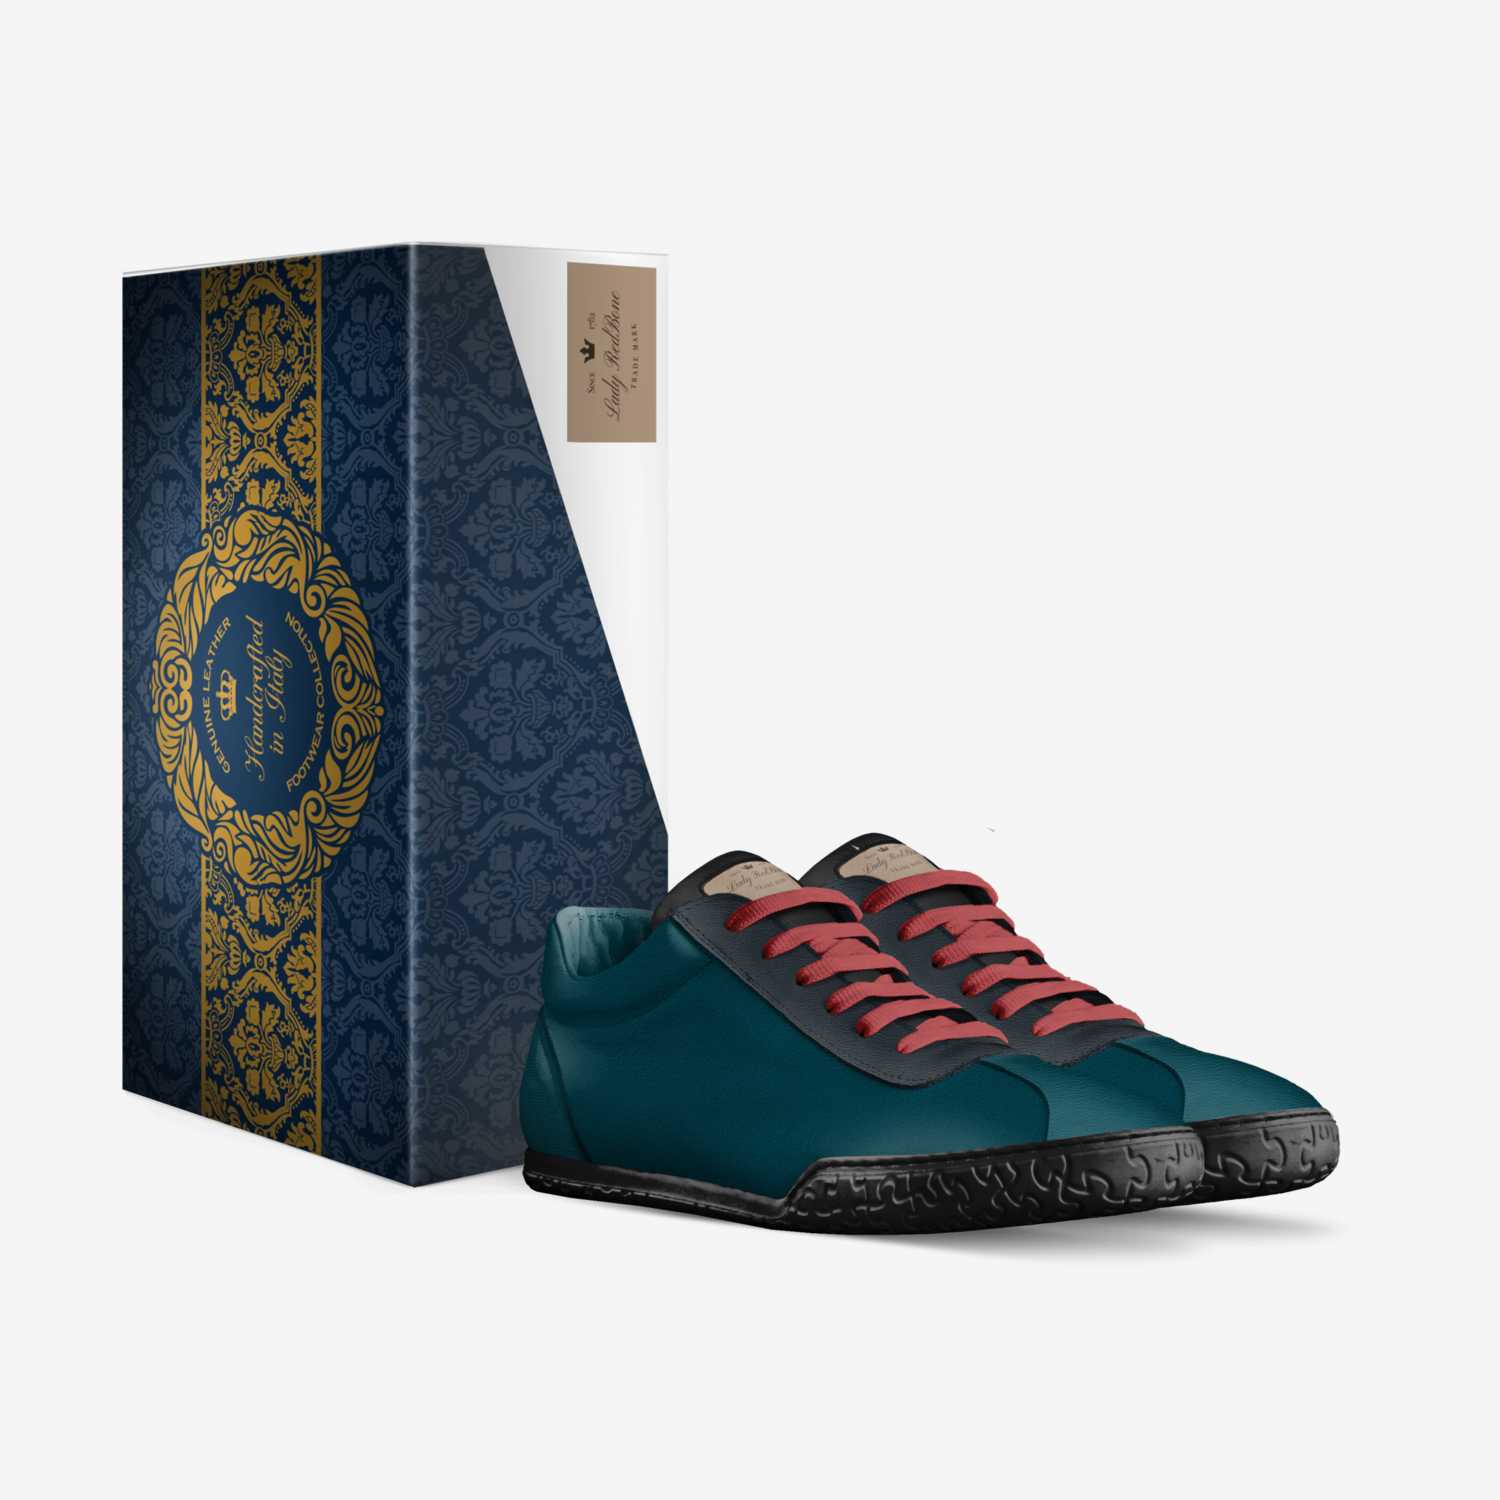 Lady RedBone custom made in Italy shoes by Natasha Smith-hazzard | Box view